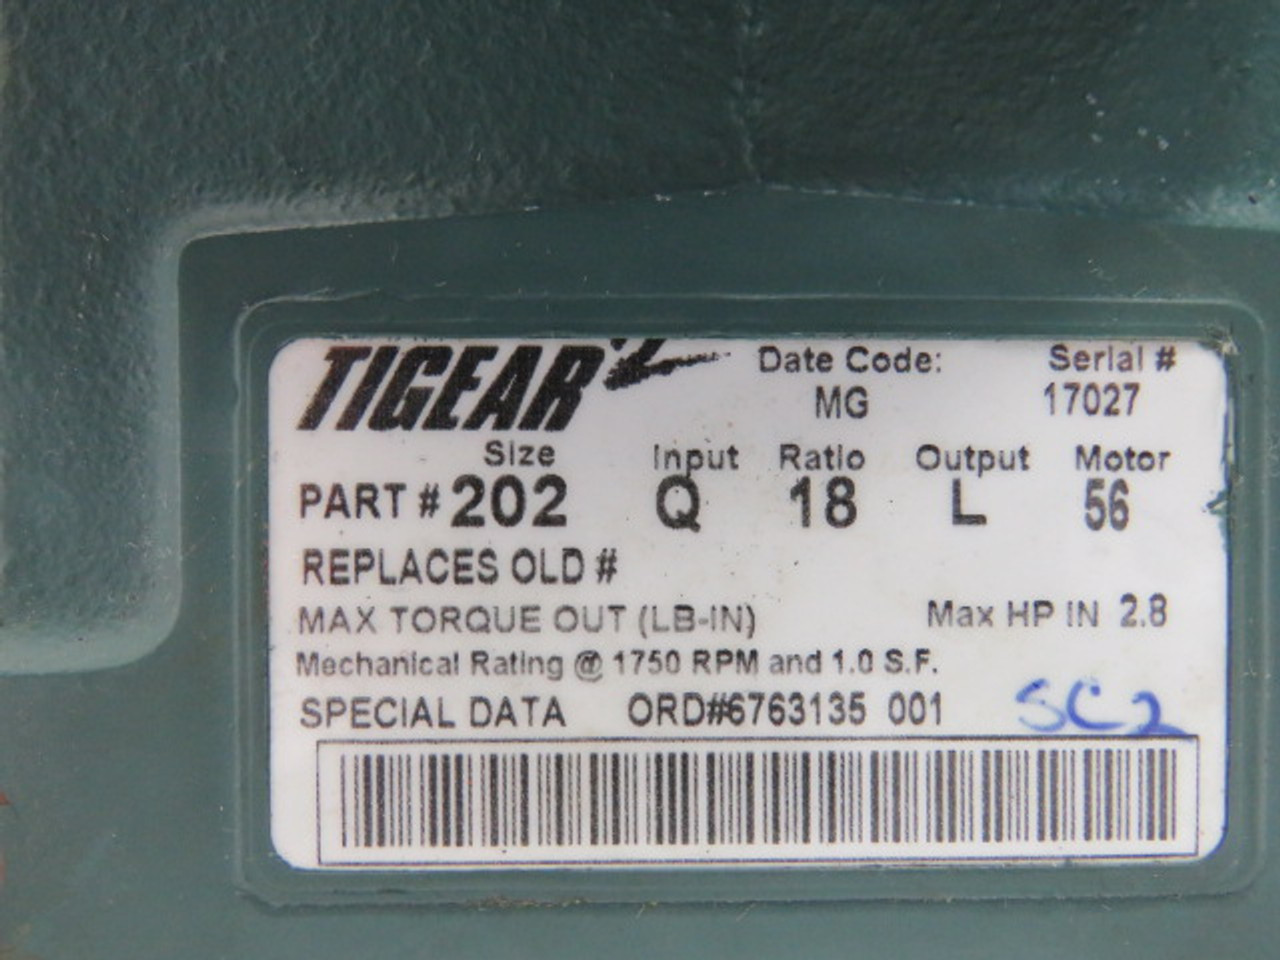 Dodge Tigear 202Q18L56 Gear Reducer 18:1 Ratio 795lb-in 2.8HP@1750rpm USED